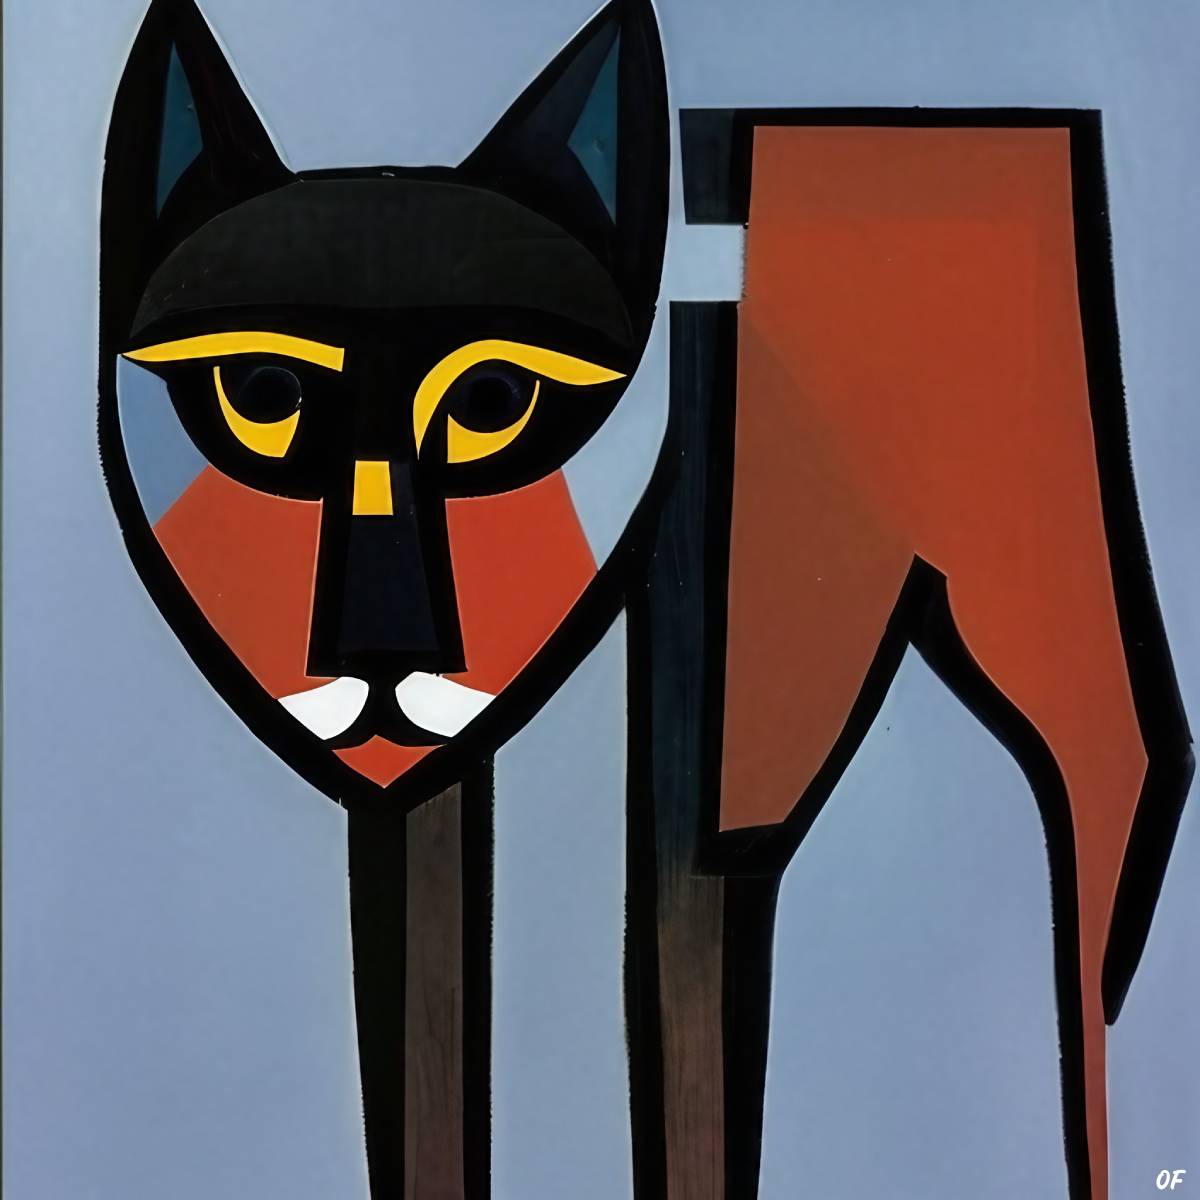 The Wolf Cat by Odd Feed (© Odd Feed)